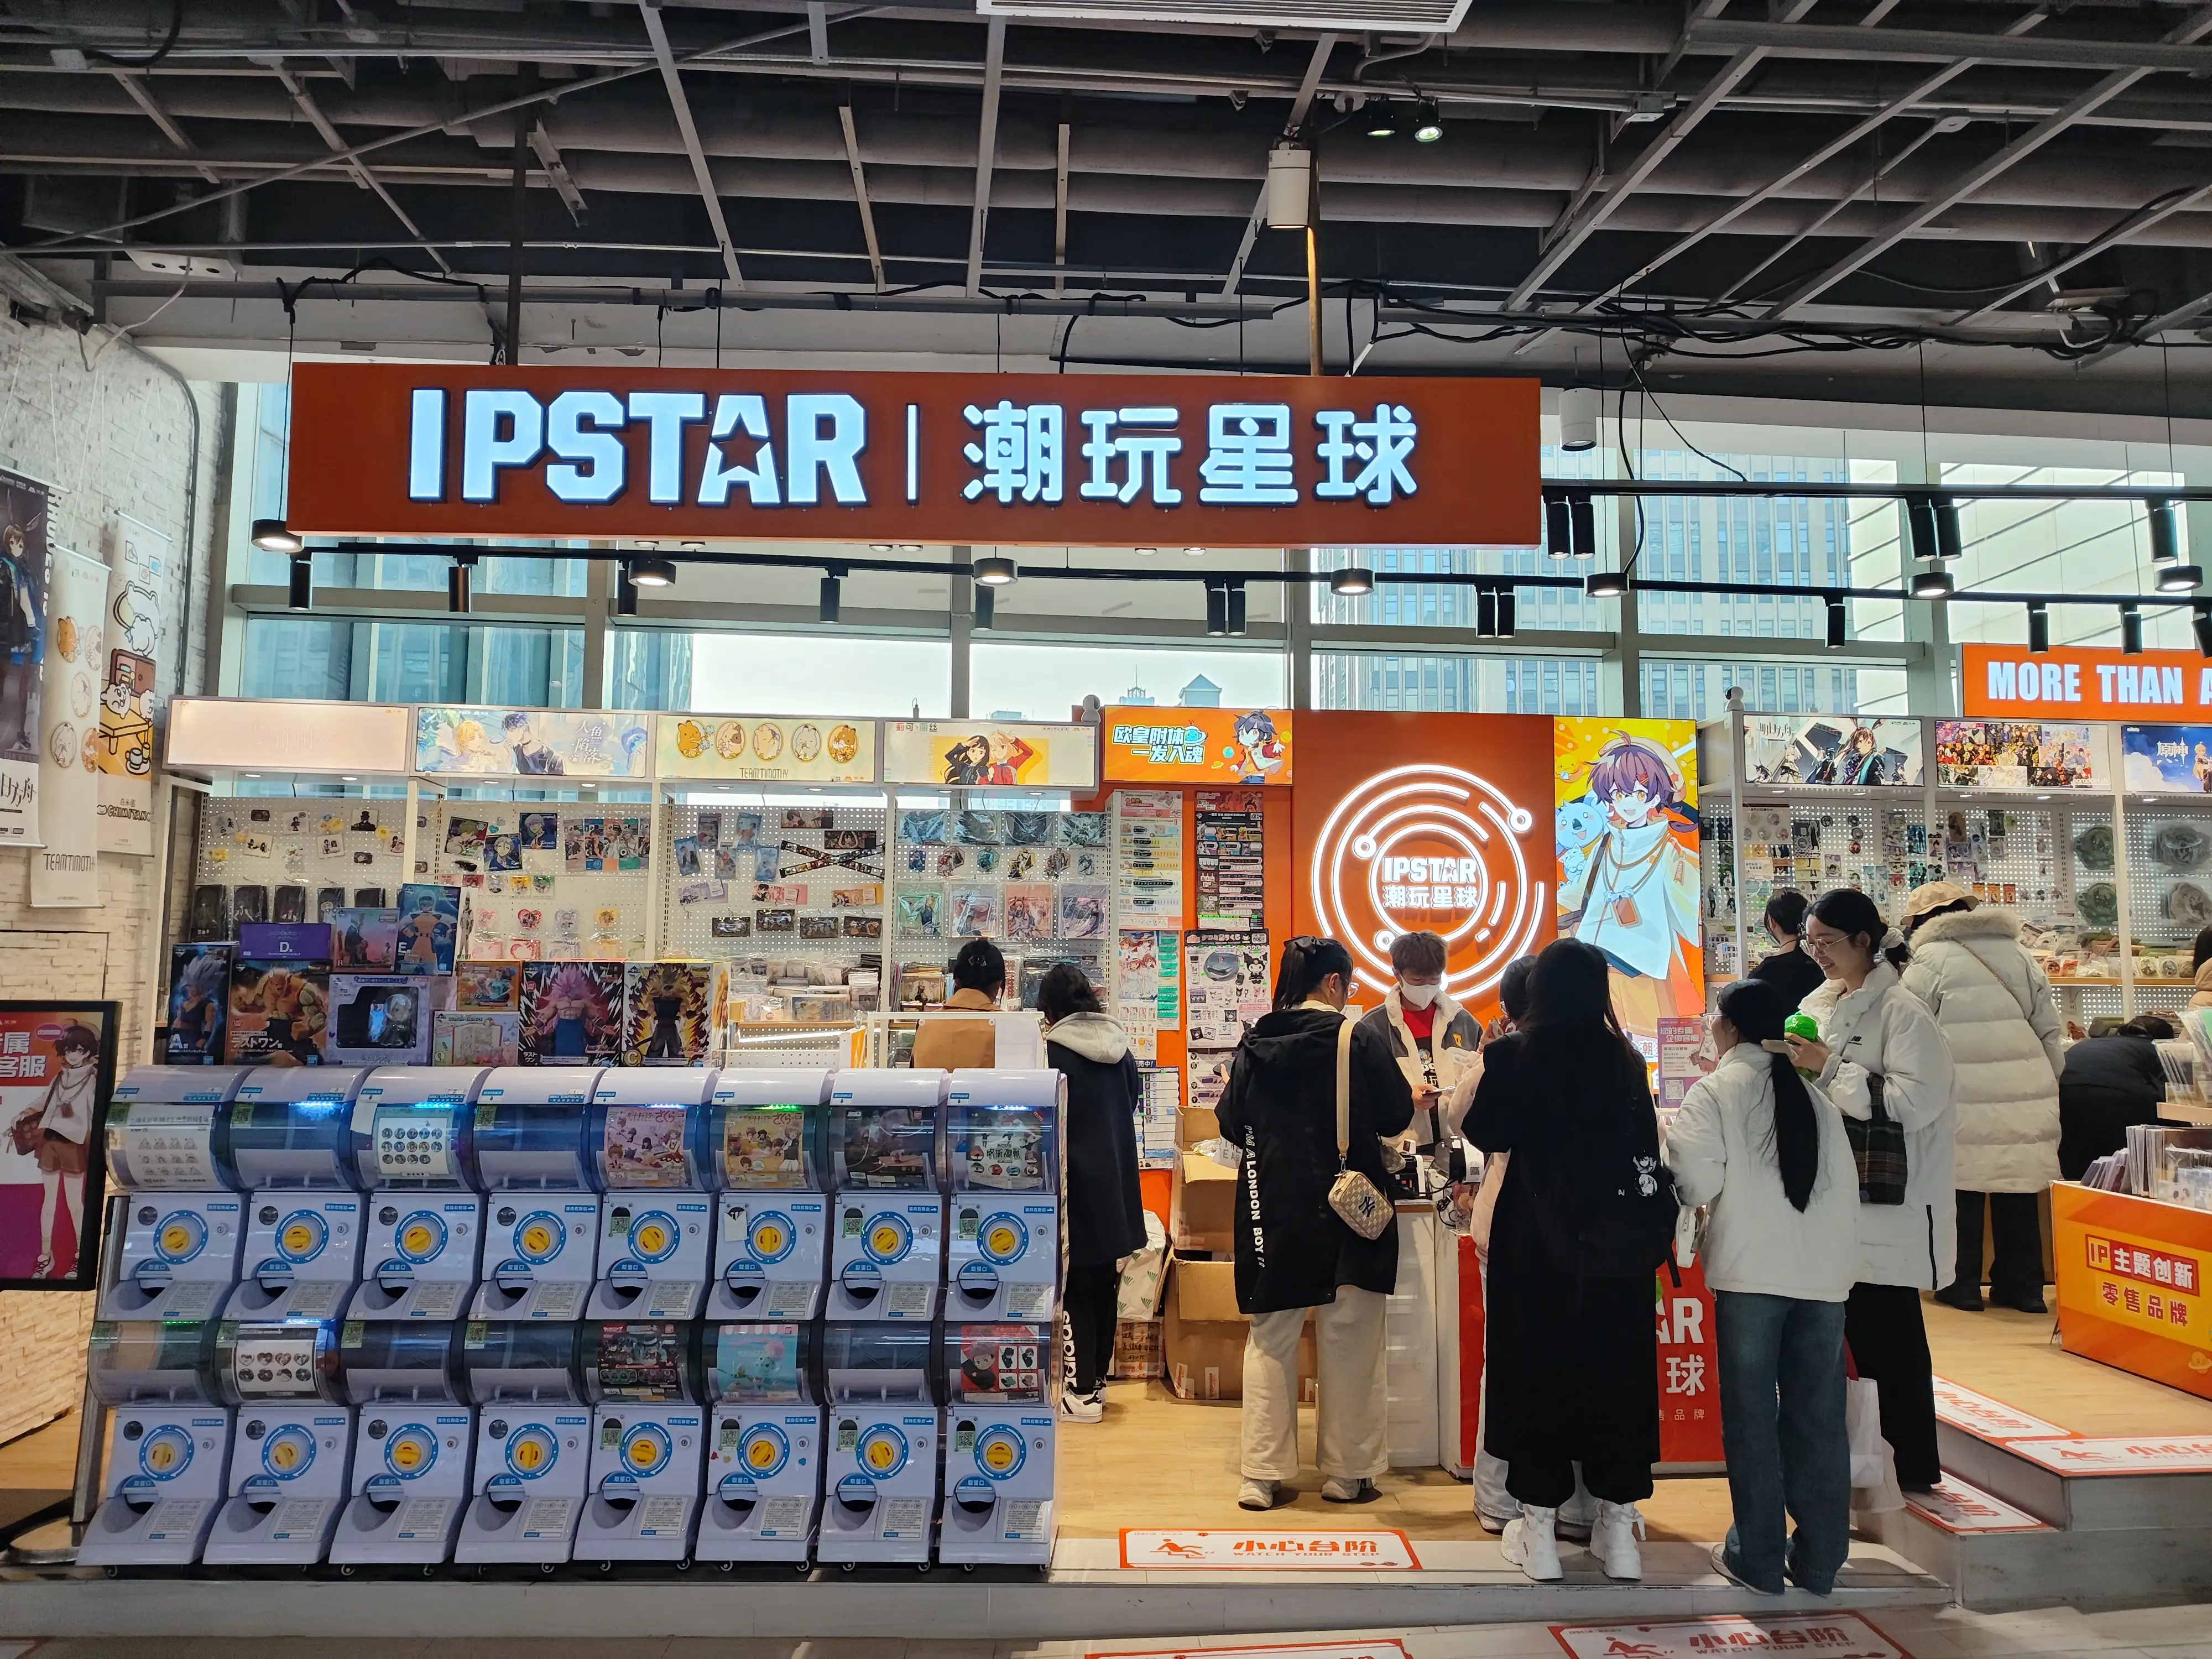 IPSTAR | 潮玩星球周边店